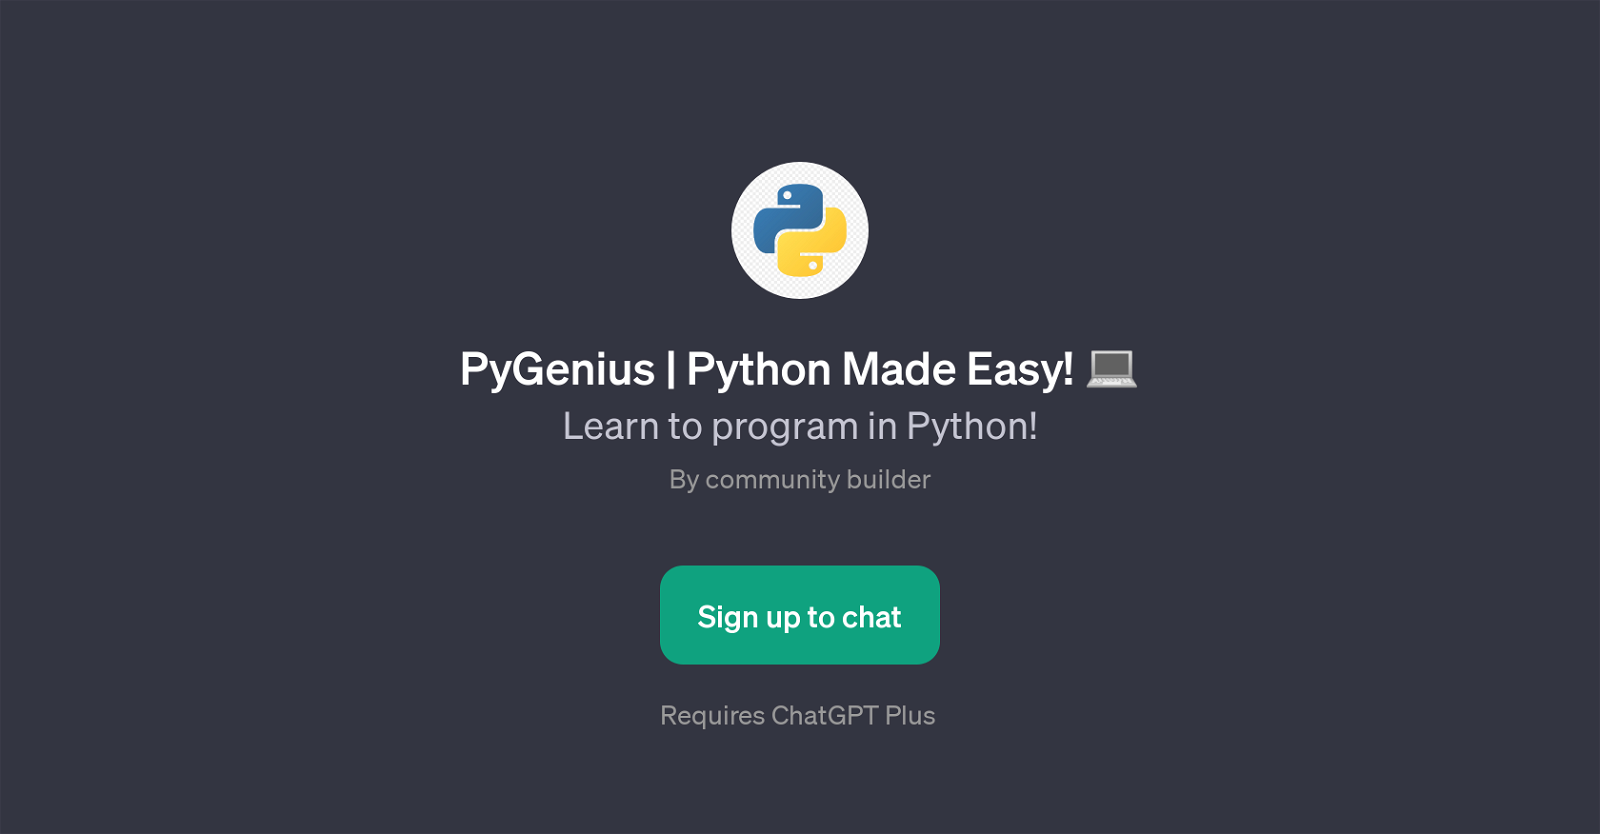 PyGenius website